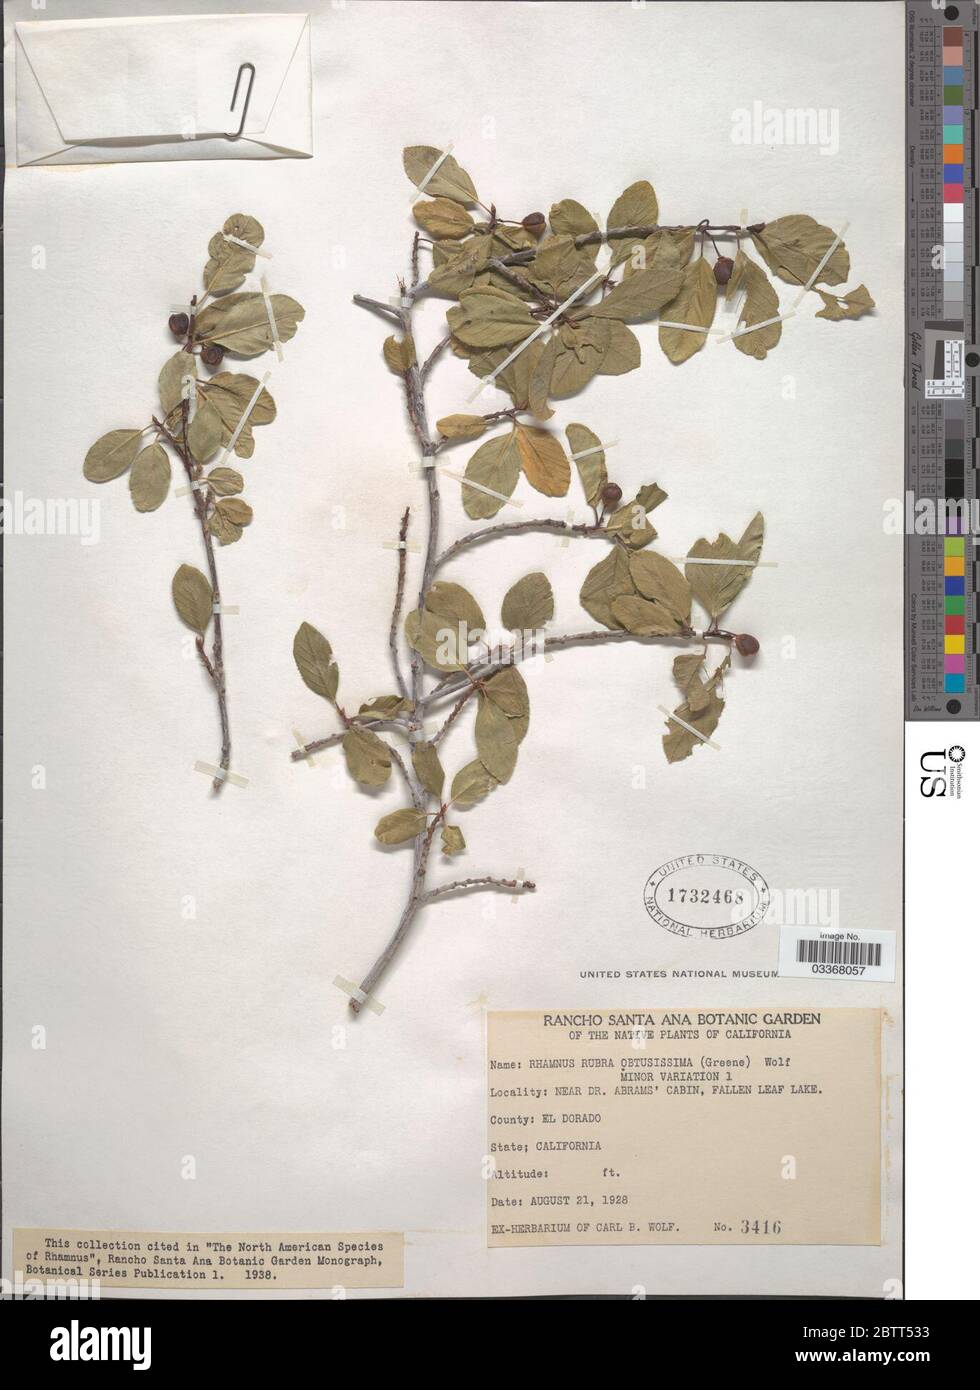 Frangula rubra subsp obtusissima Greene Kartesz Gandhi. Stock Photo